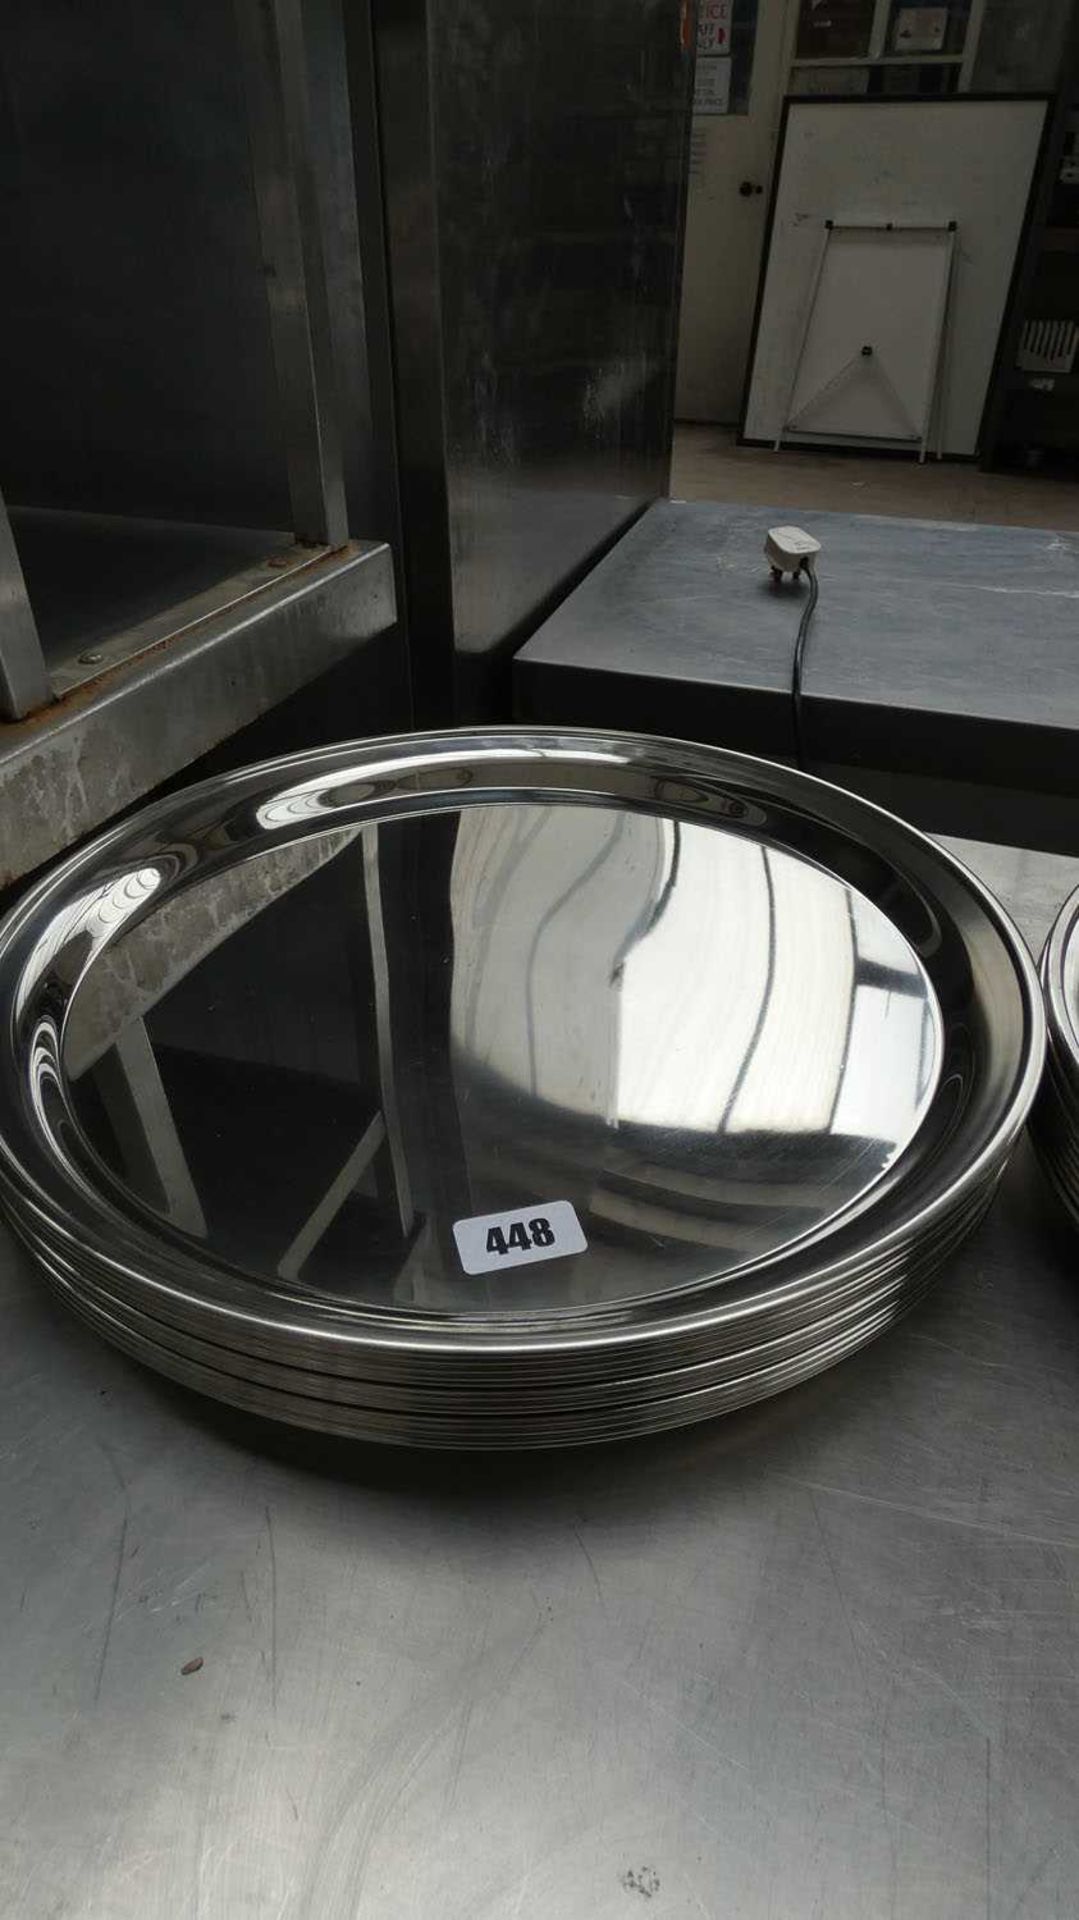 12 x 40cm diameter round metal serving trays